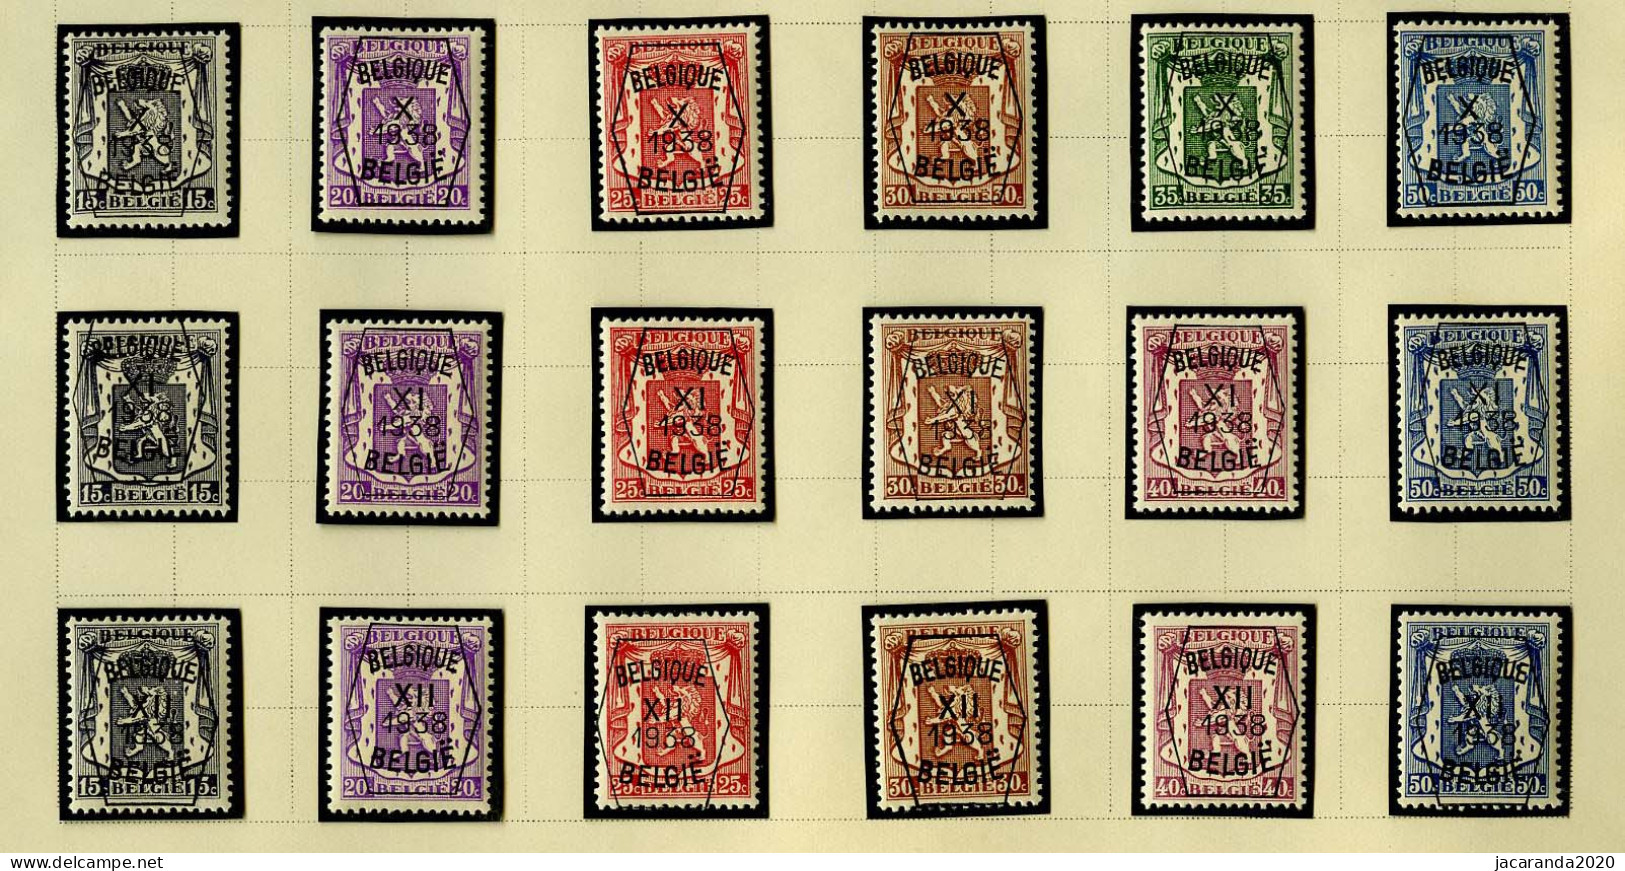 België PRE369... * - Reeks 7 - 9 - 10 - 11 - 12 - MH - Typo Precancels 1936-51 (Small Seal Of The State)